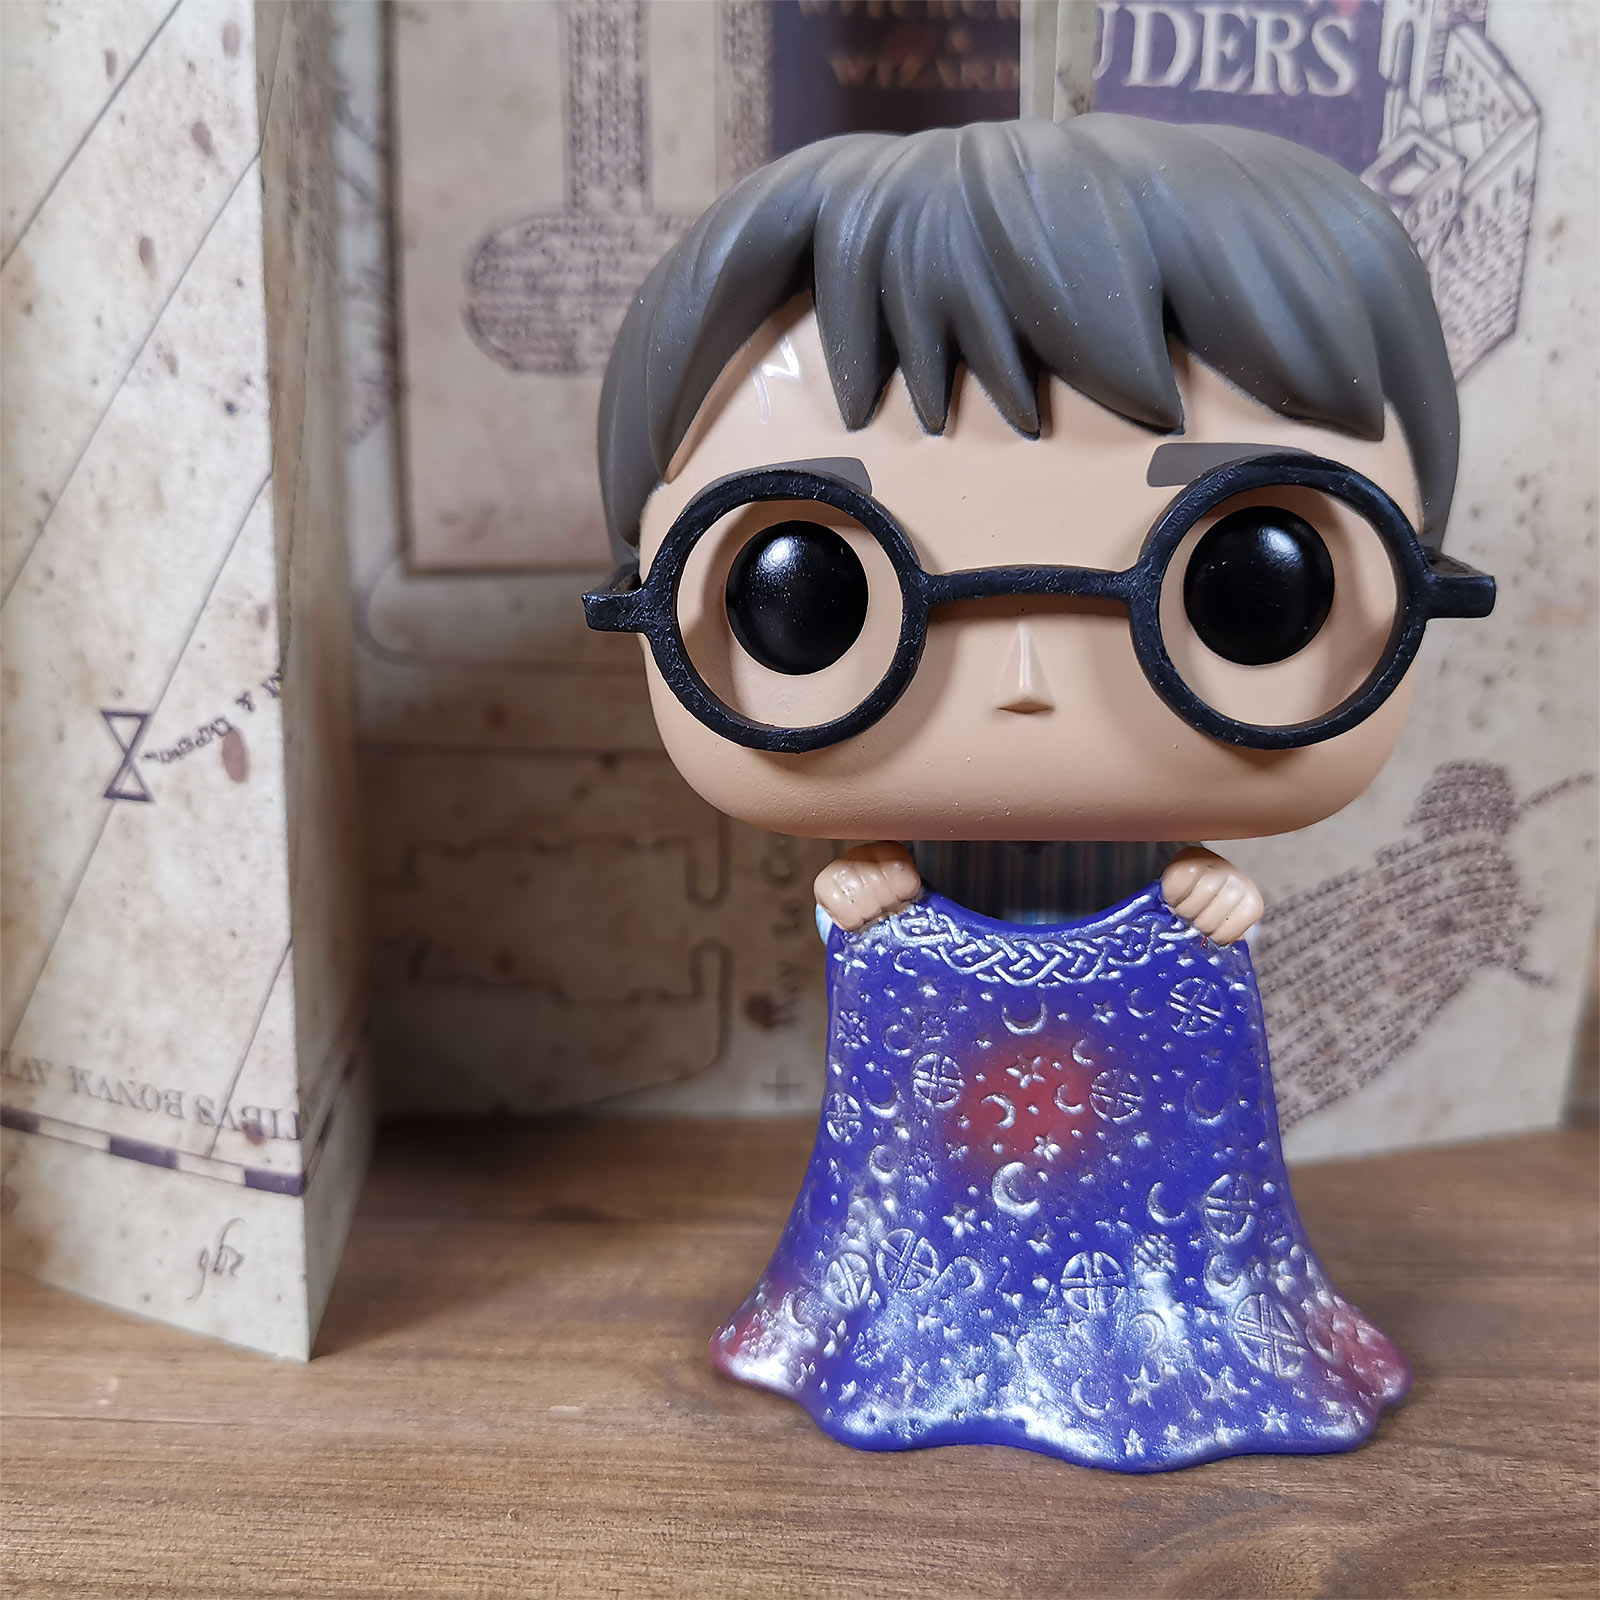 Harry Potter with Invisibility Cloak Funko Pop Figure